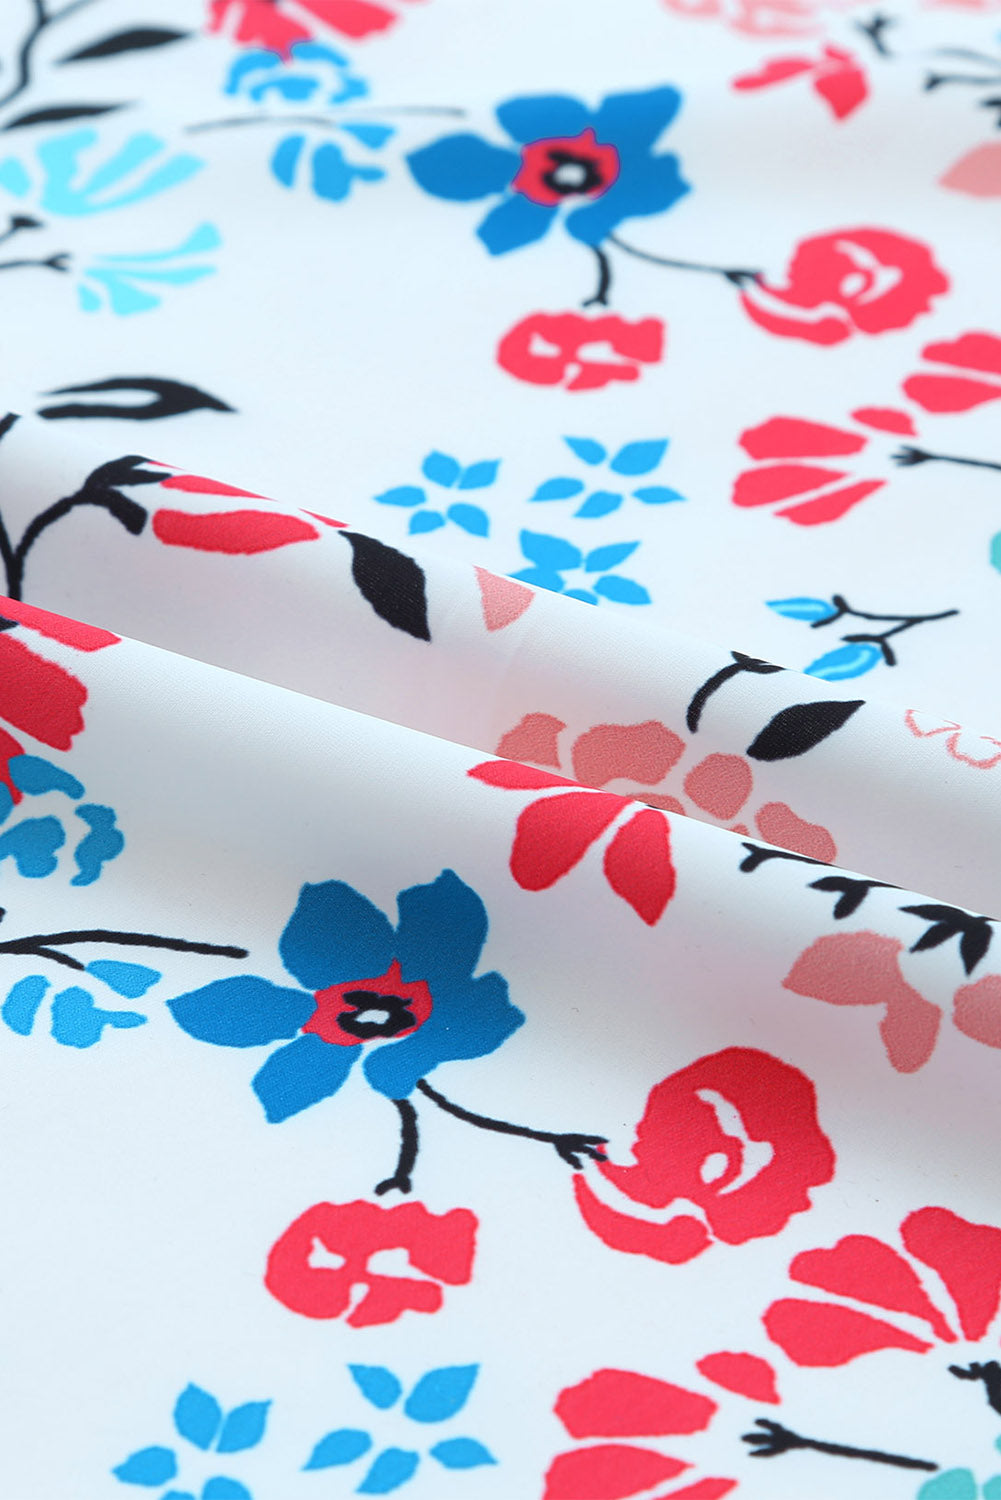 Quimono floral de manga larga con borlas y lazo multicolor